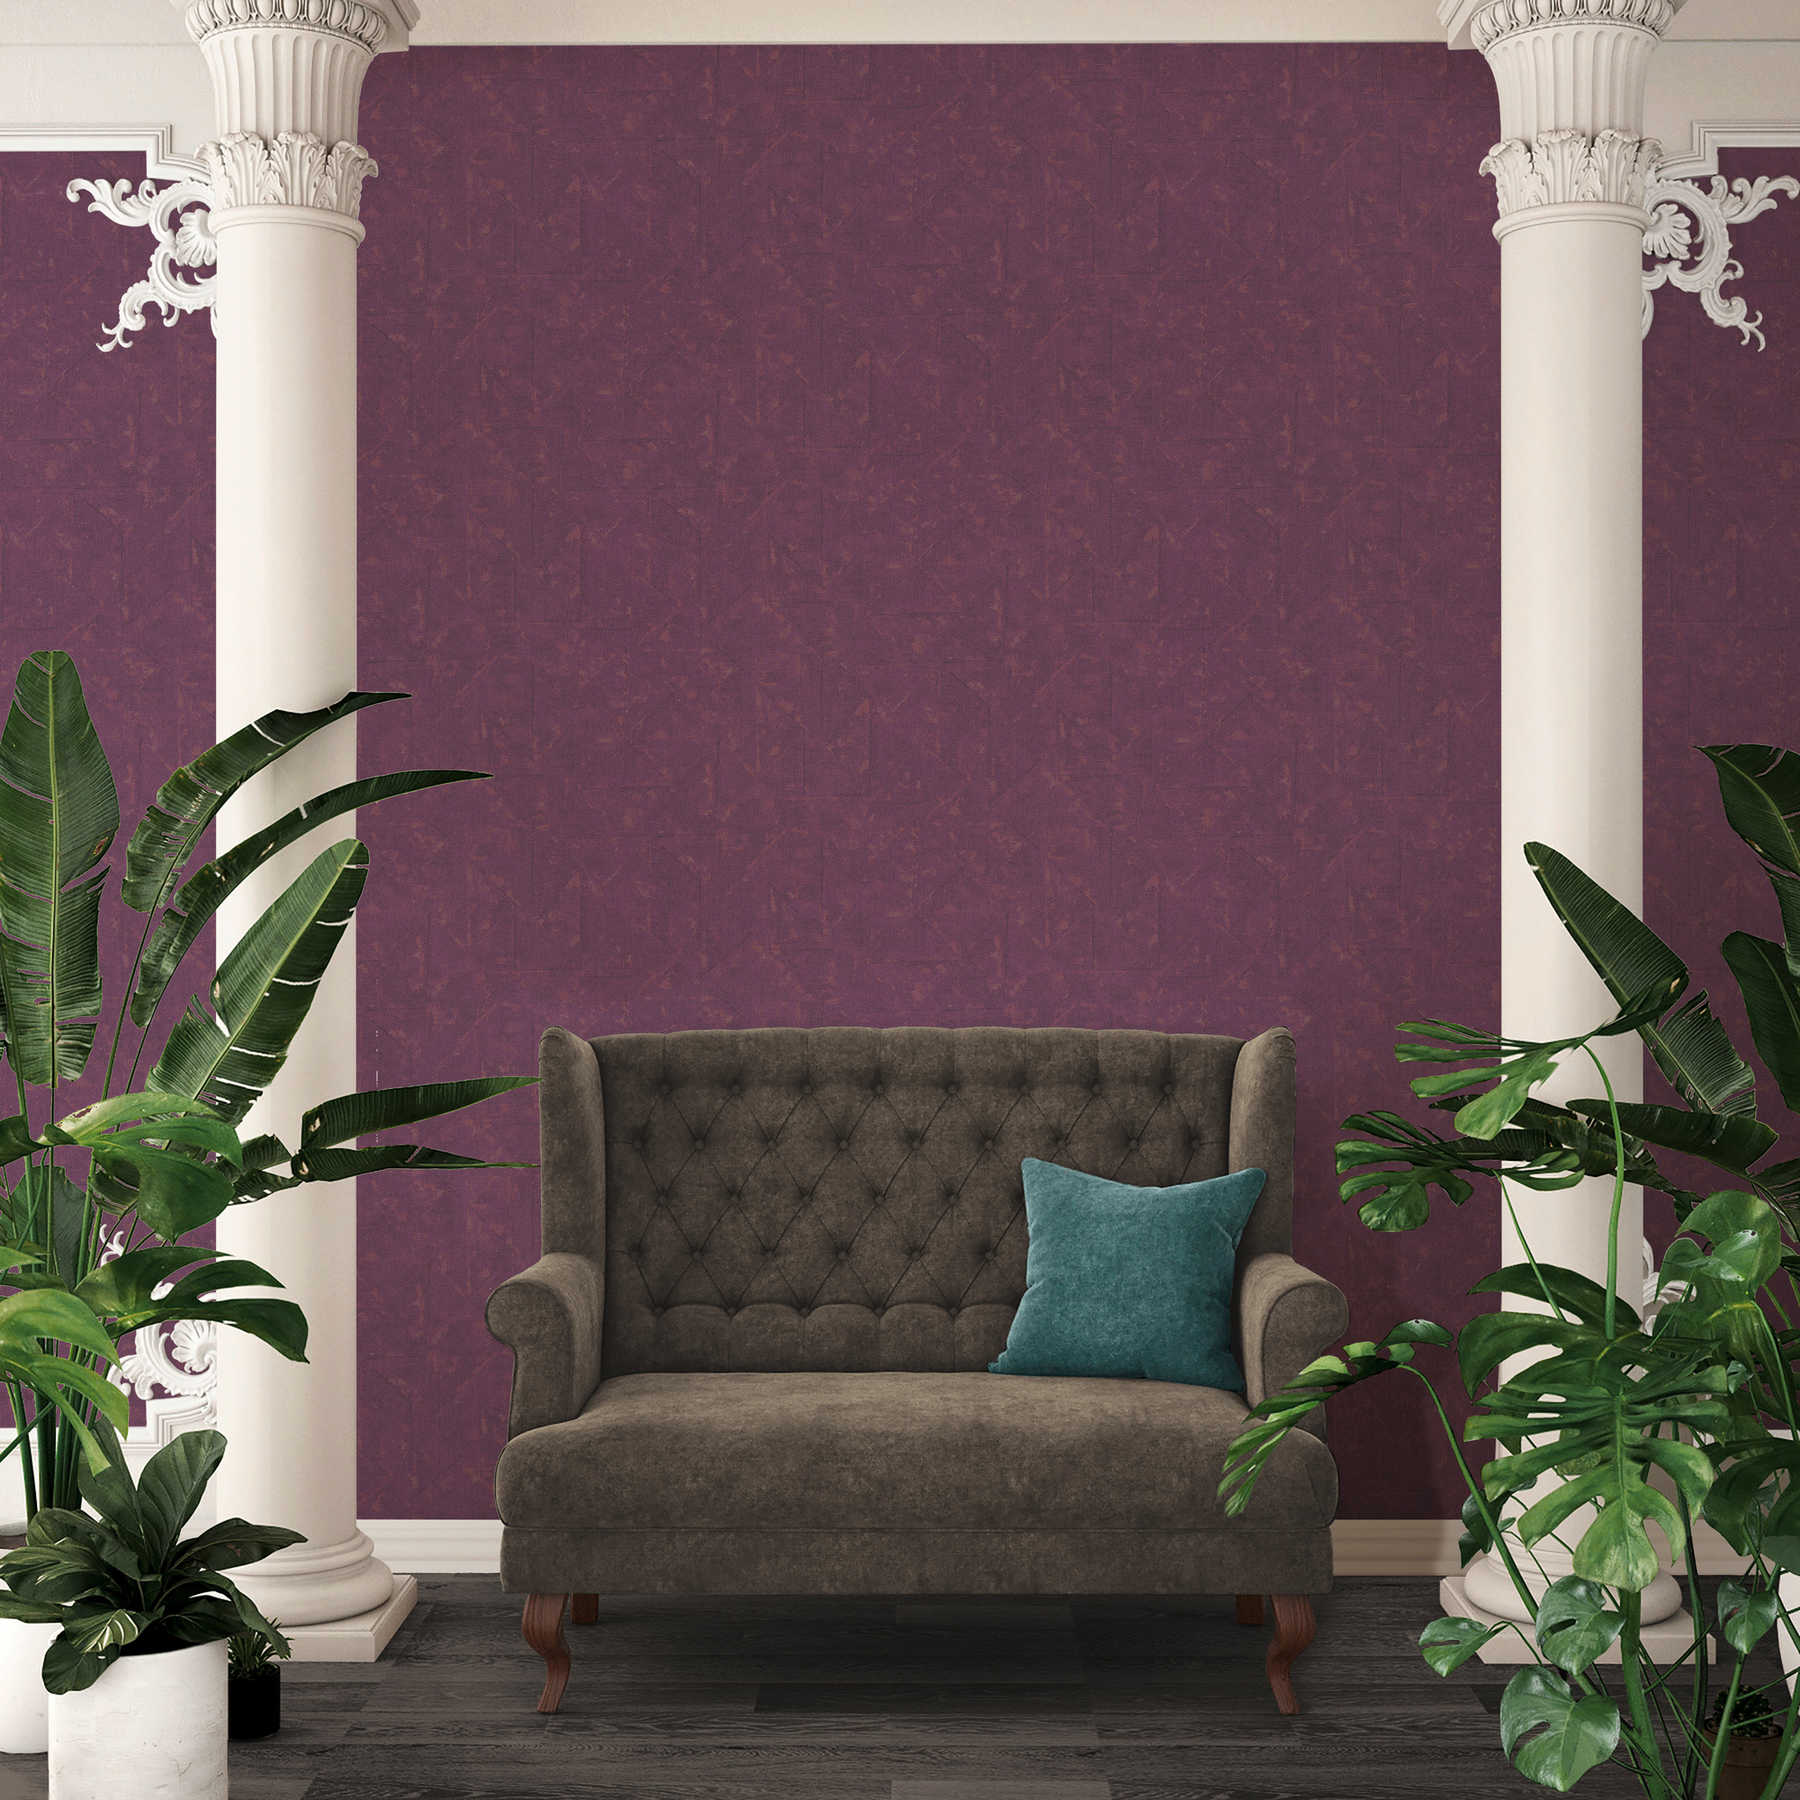             Non-woven wallpaper magenta with asymmetrical pattern - purple
        